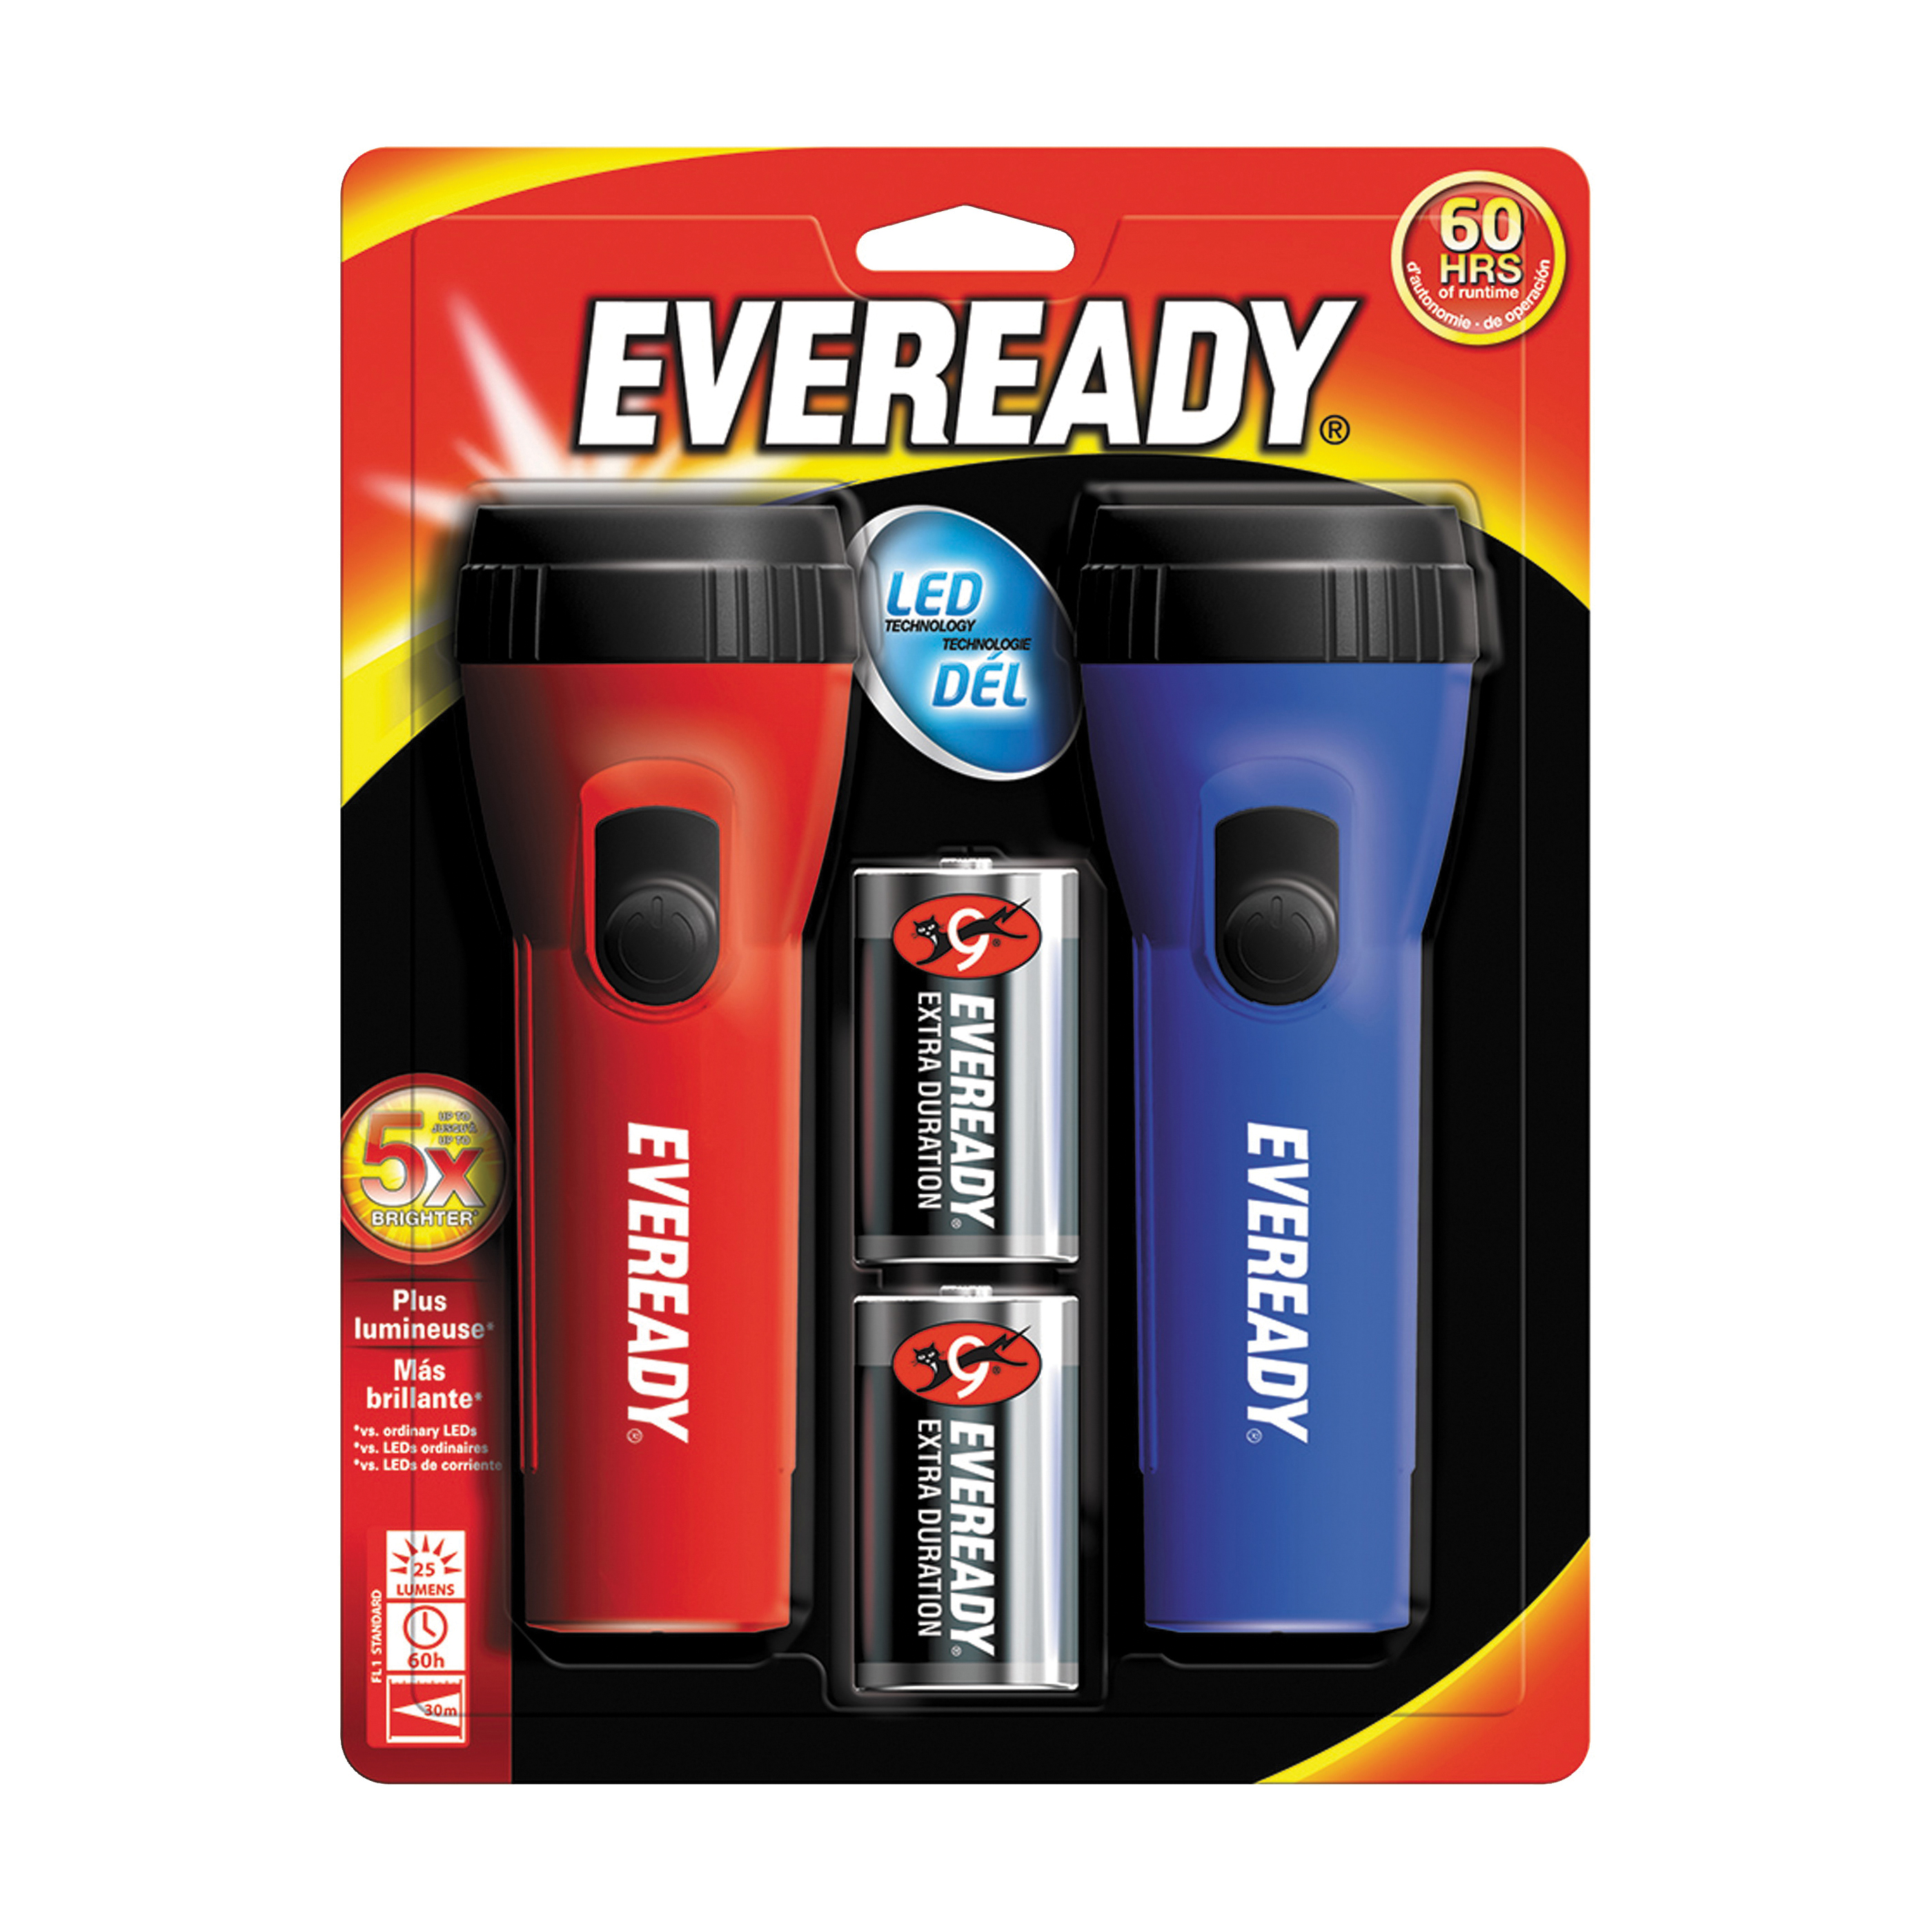 EVEL152S Flashlight, D Battery, Carbon Zinc Battery, LED Lamp, 9 Lumens, 57 m Beam Distance, 50 hr Run Time